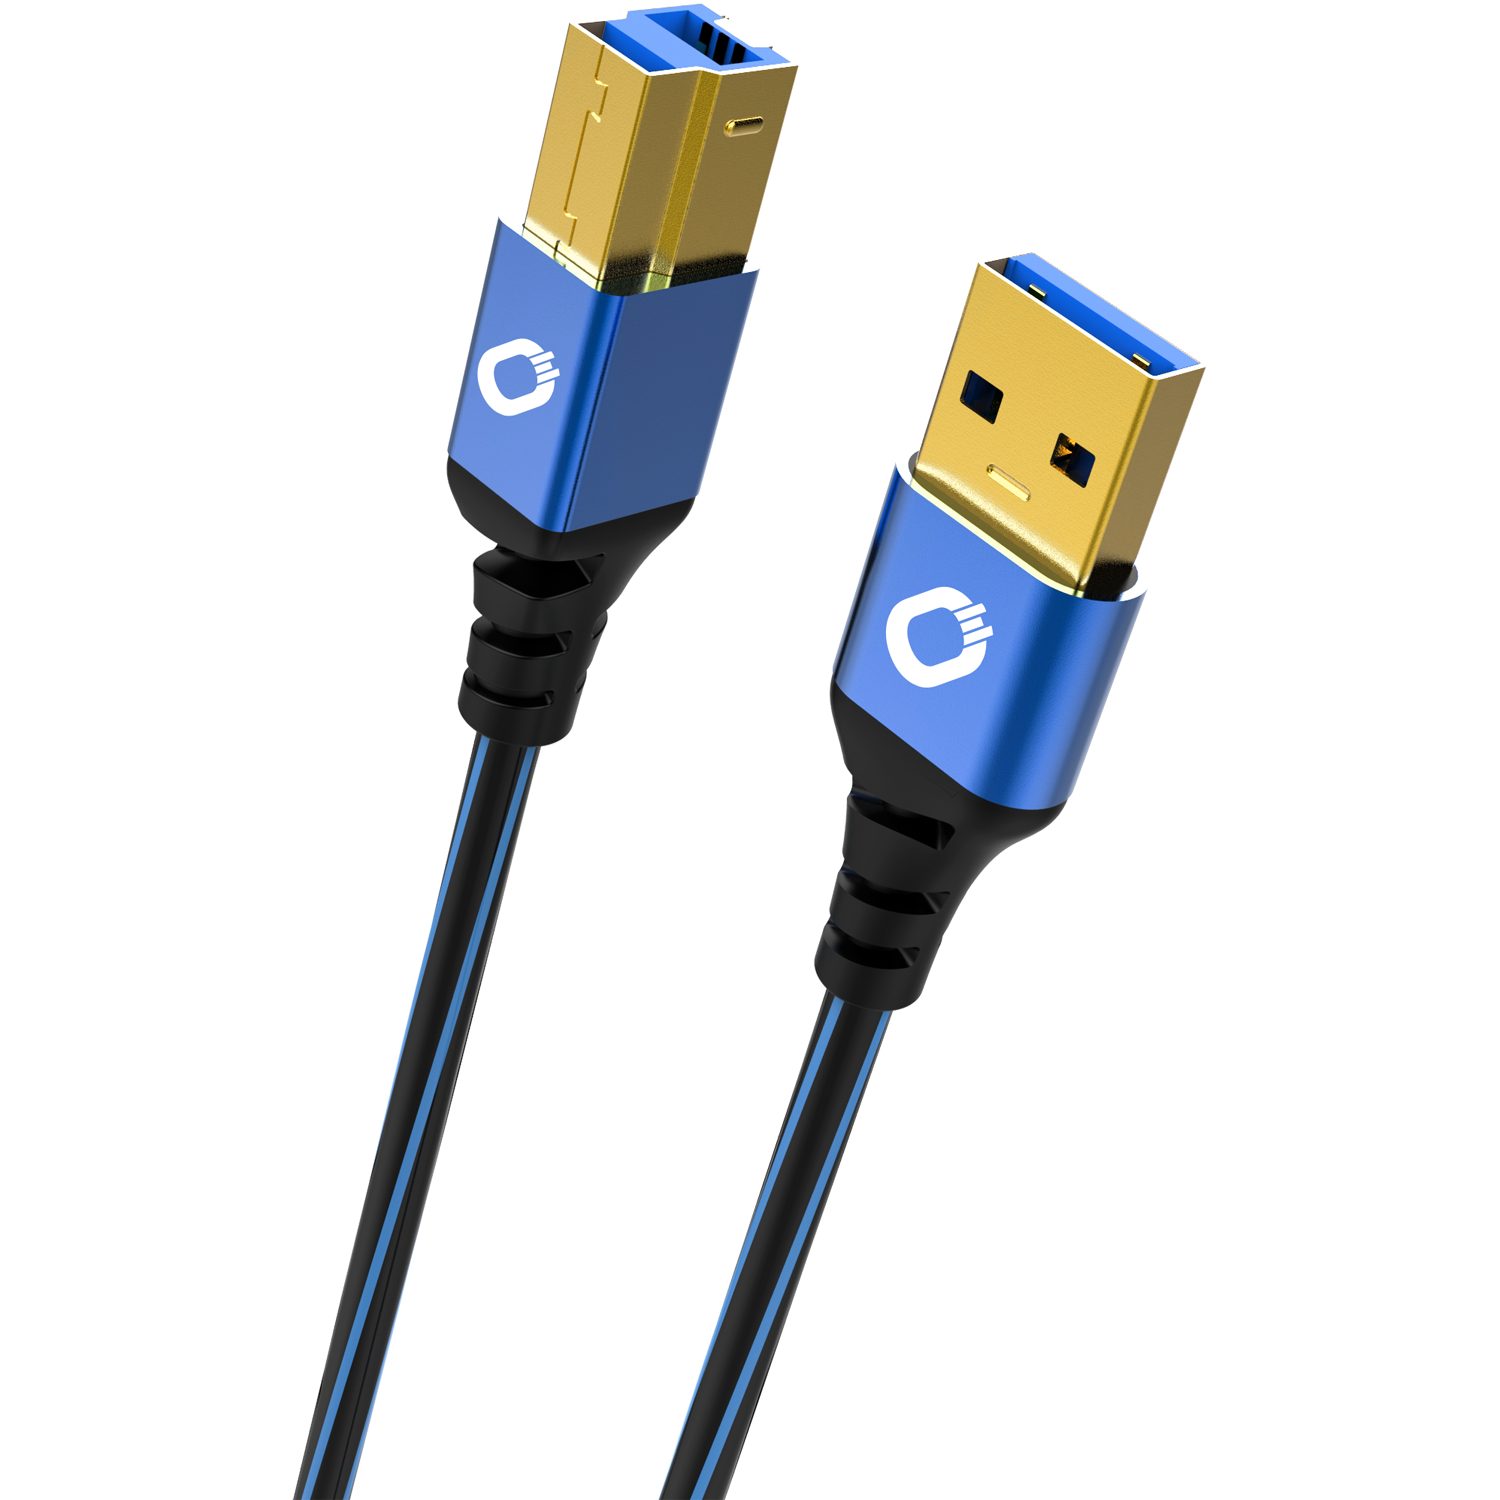 Oehlbach »USB Plus B3 - USB 3.0 - Kabel für Drucker, externe Festplatte -  Typ A zu Typ B - PVC-Mantel - OFC, blau/schwarz - 50cm« USB-Kabel, USB 3.2  Gen 1 Typ-A,